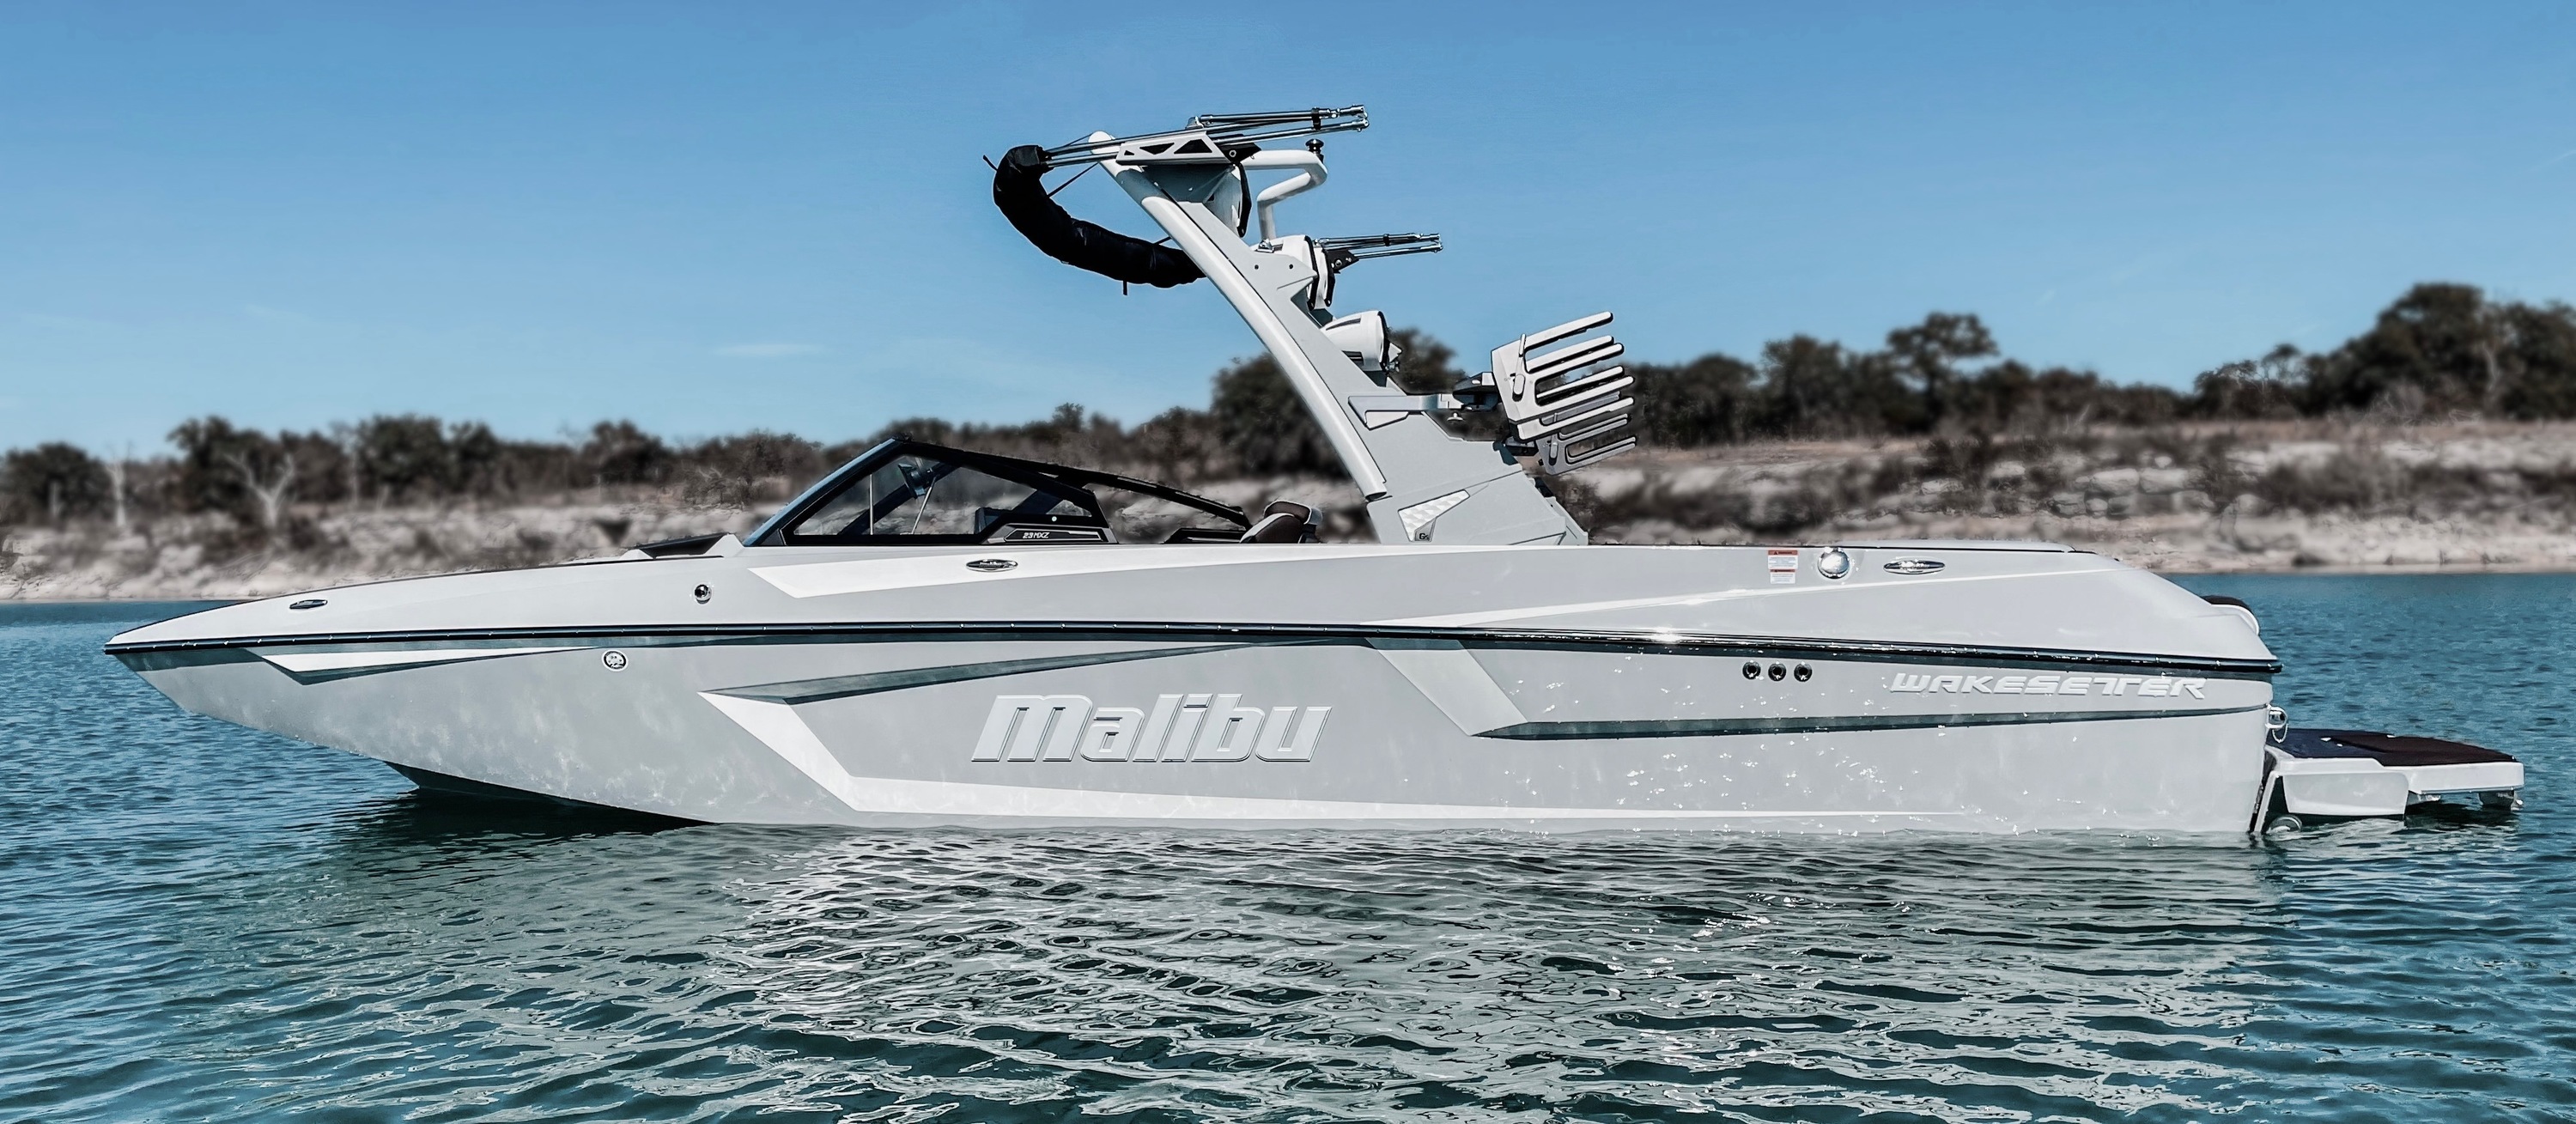 Malibu Boat for sale in Texas Malibu, Austin, Texas